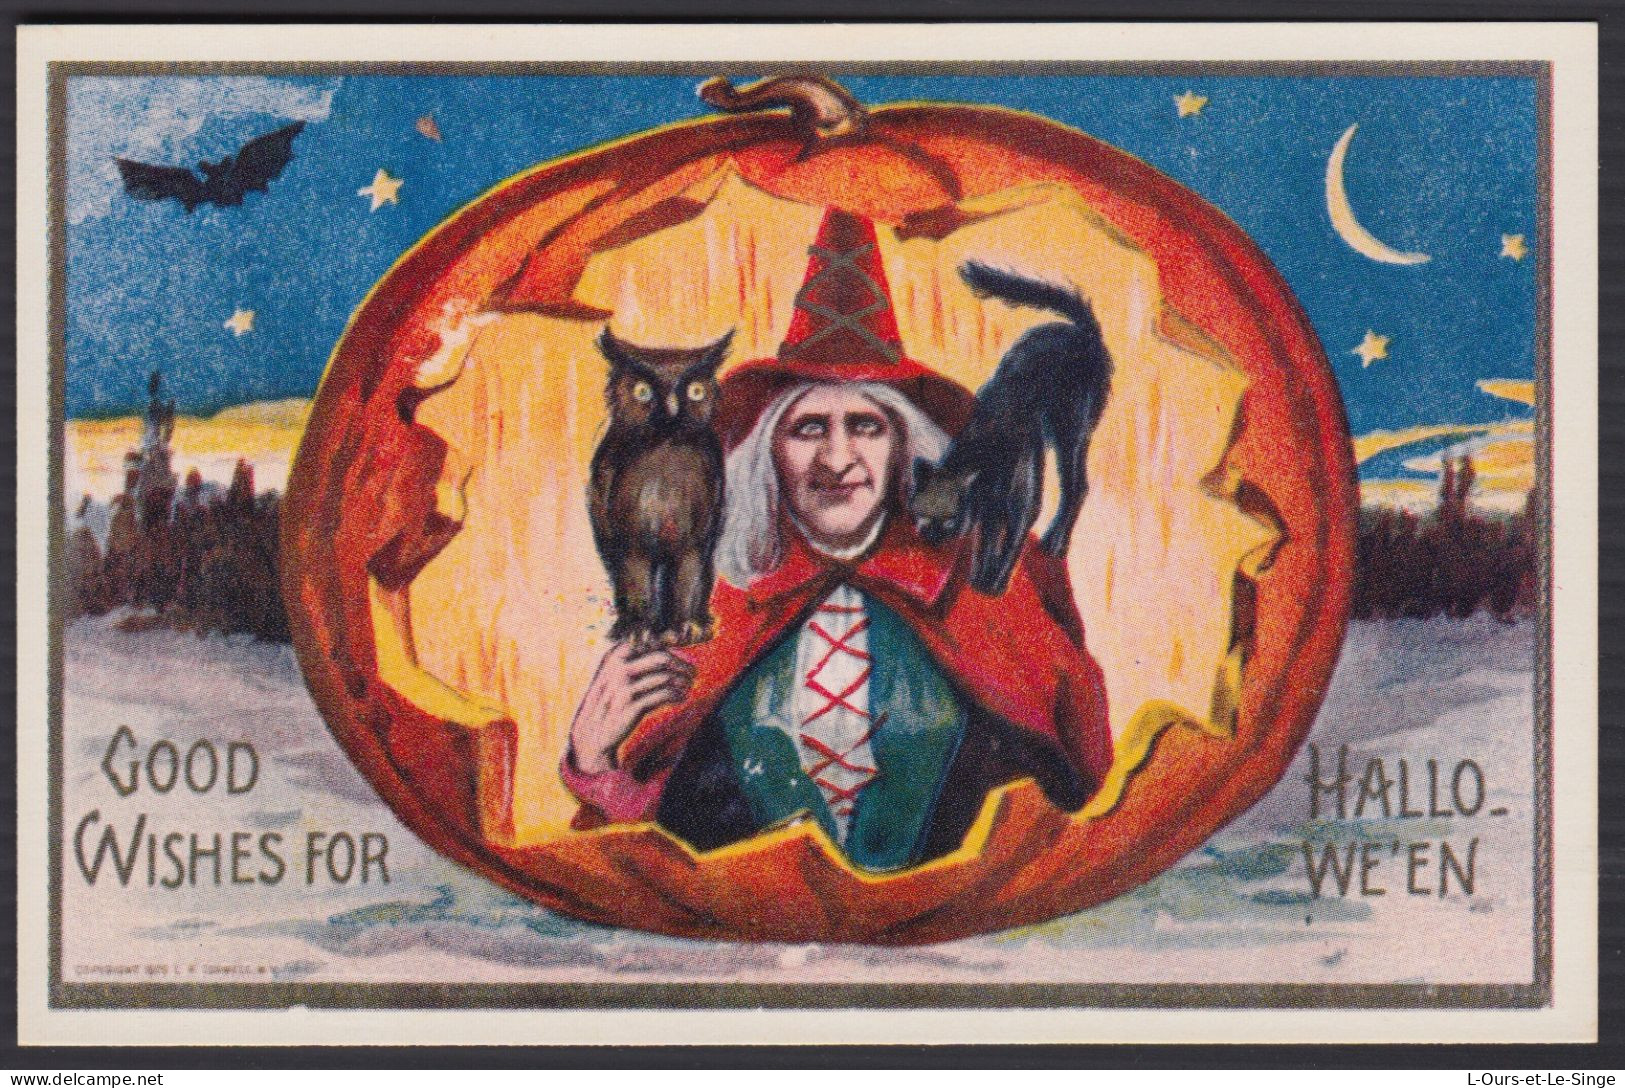 Good Wishes For Hallowe'en - - Halloween